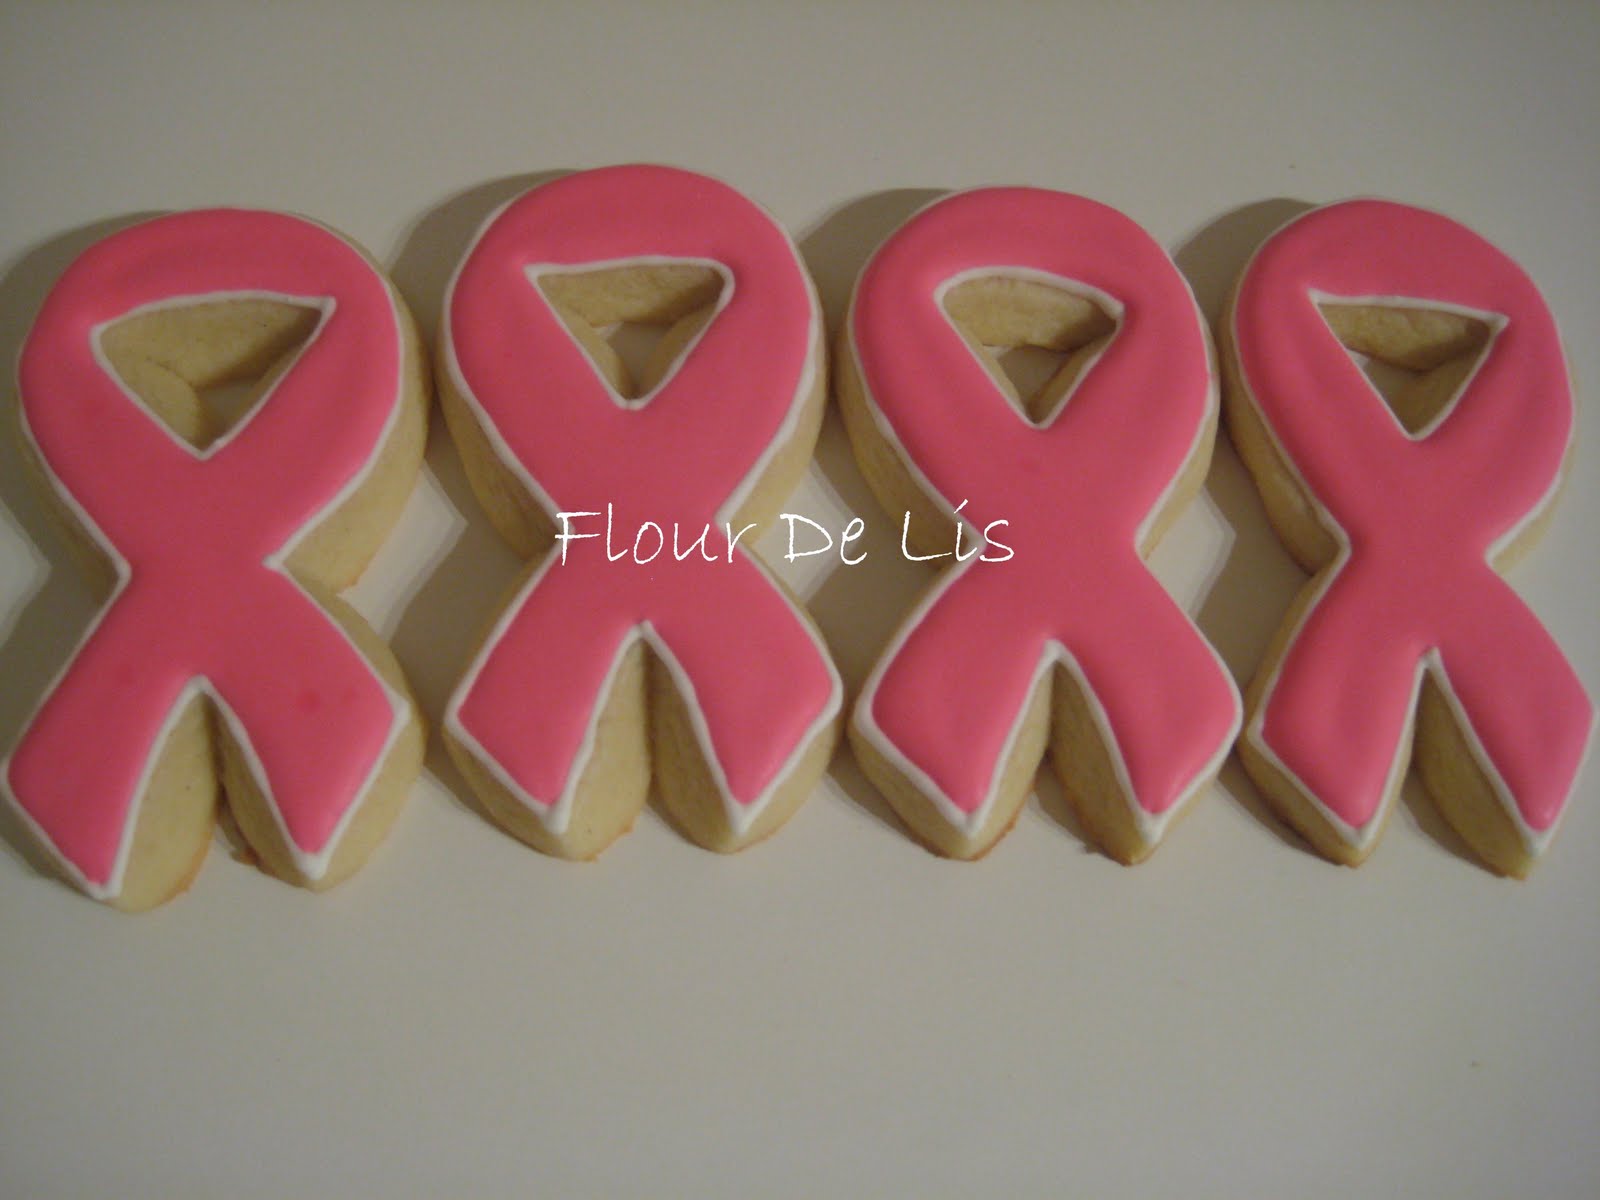 http://4.bp.blogspot.com/-vqpx83_kc08/Tb9rJgKOD3I/AAAAAAAAATE/175myE-aels/s1600/Pink+Ribbons+2.jpg